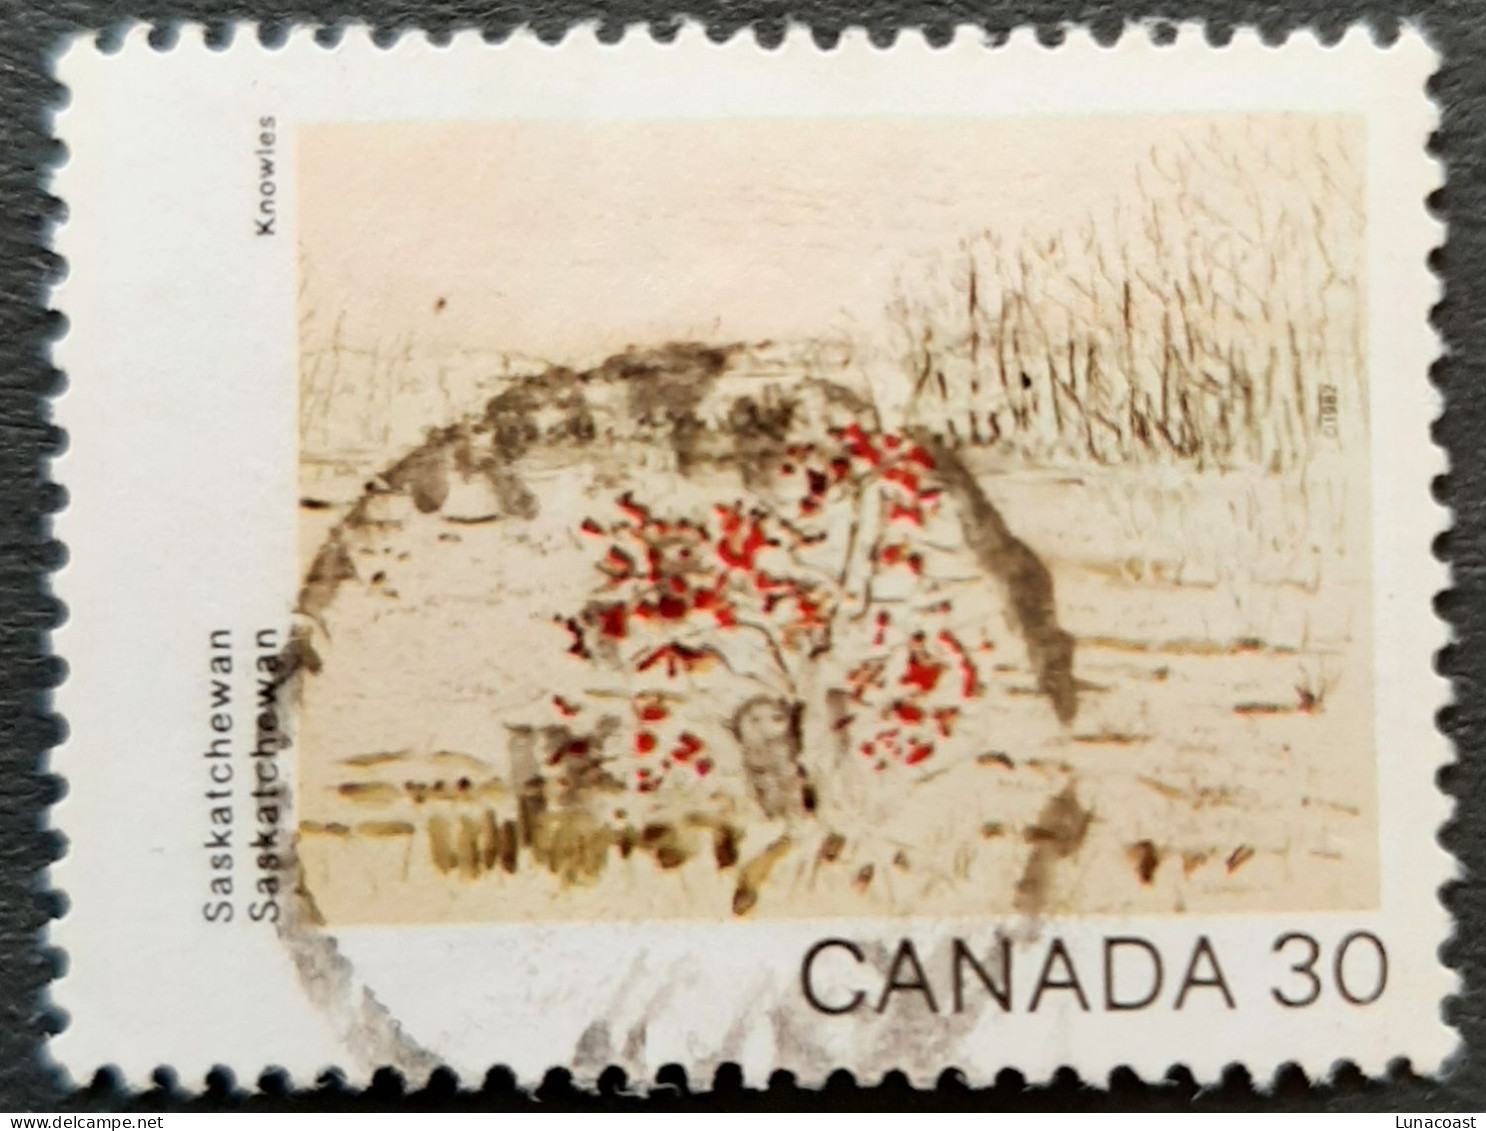 Canada 1982  USED  Sc961,  30c Canada Day, Saskatchewan - Usati